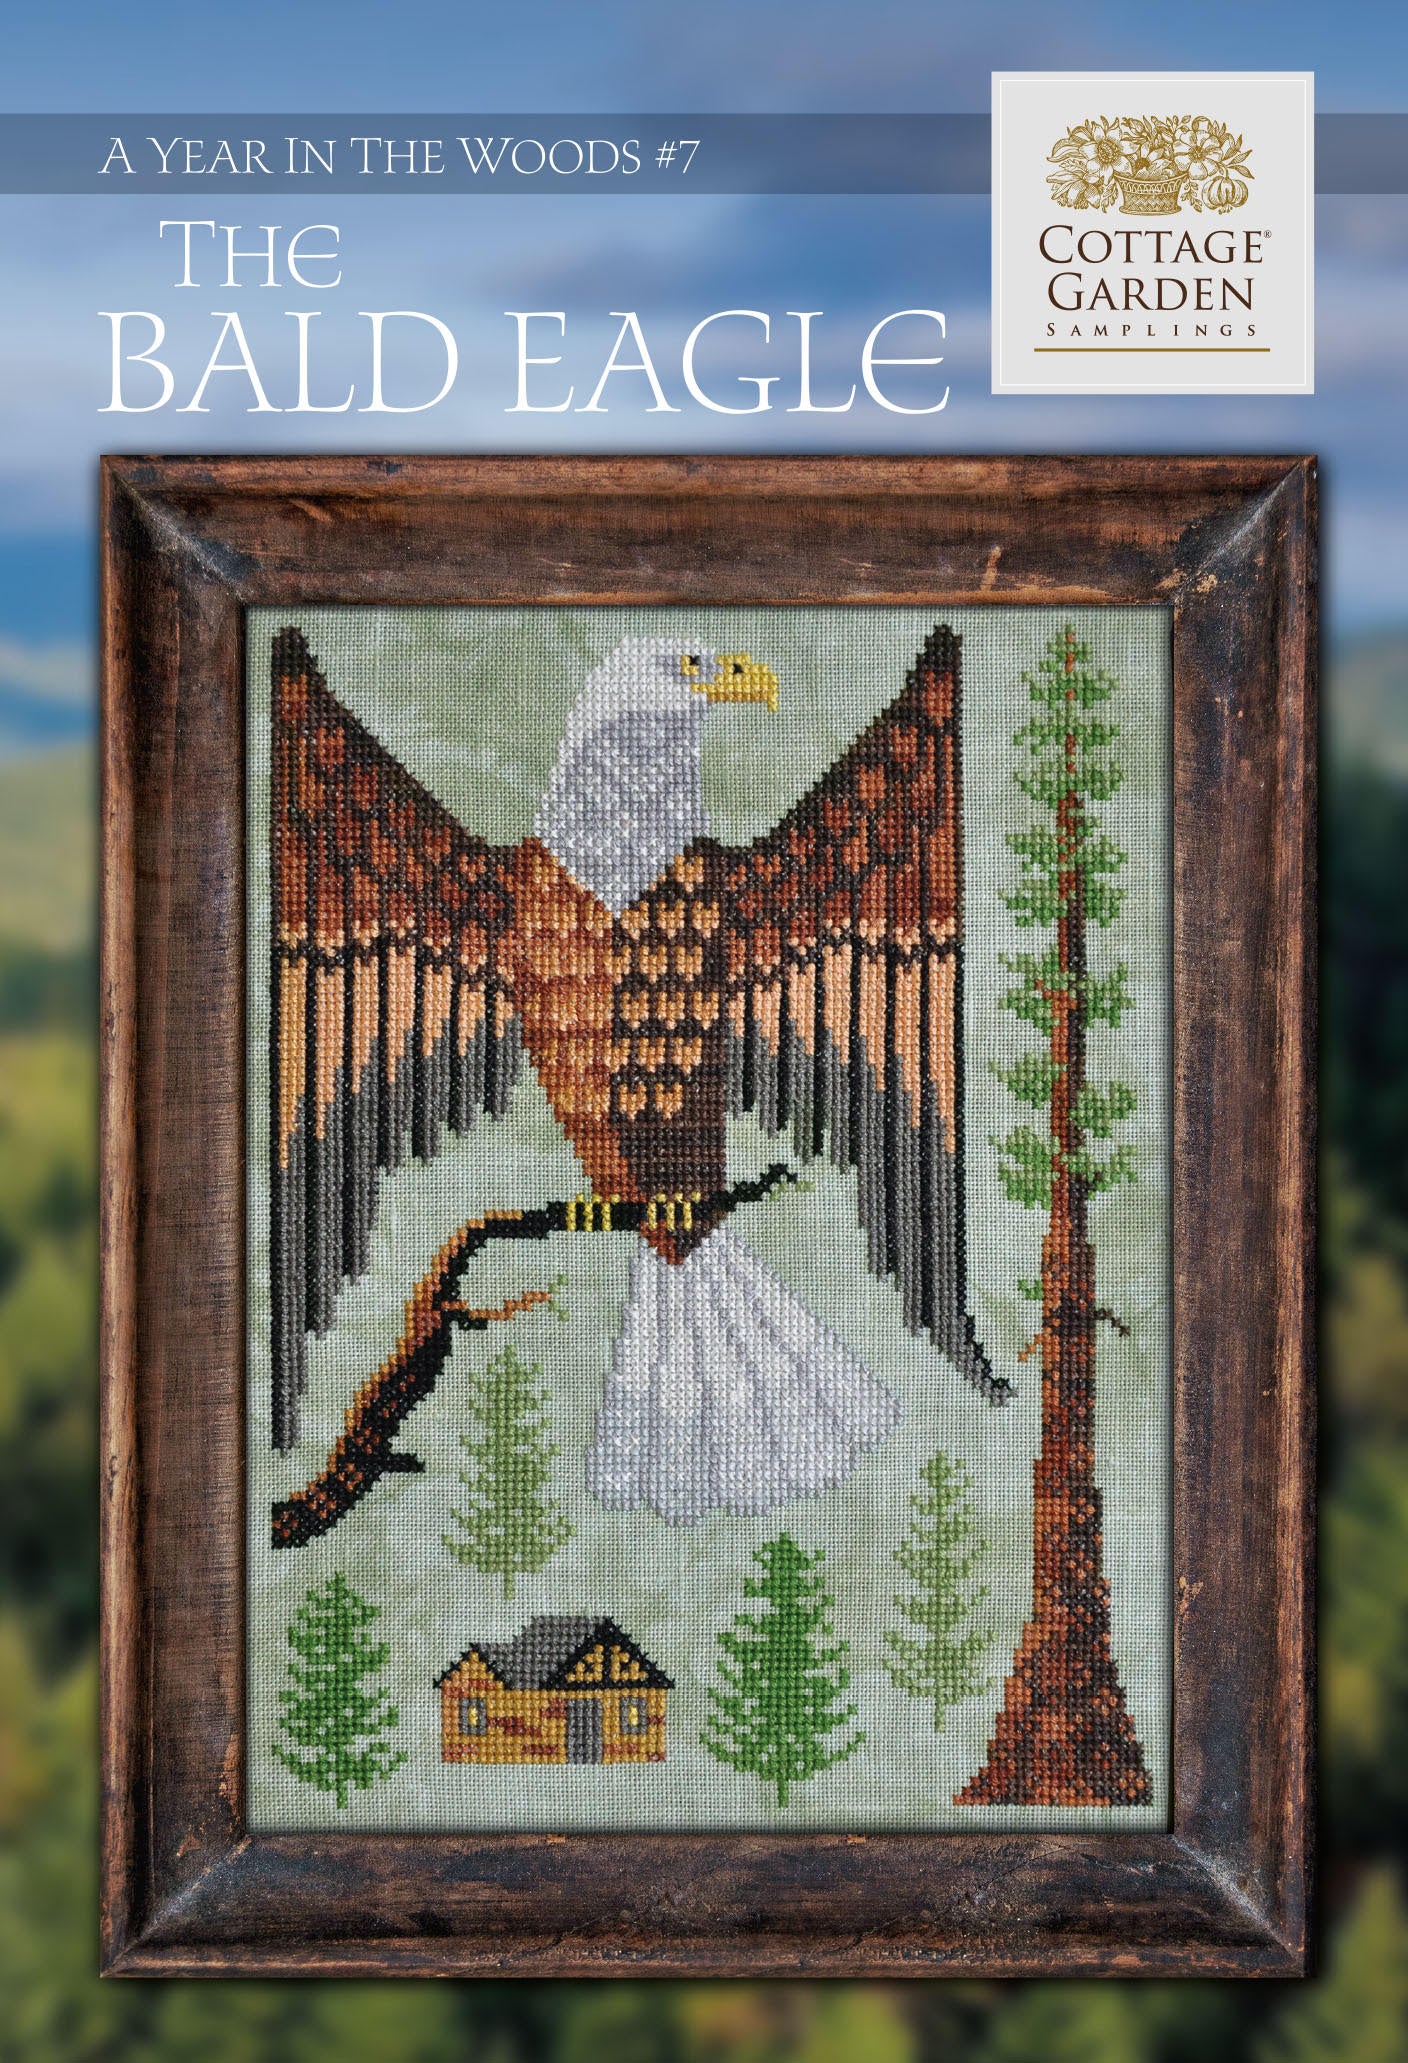 The Bald Eagle by Cottage Garden Samplings